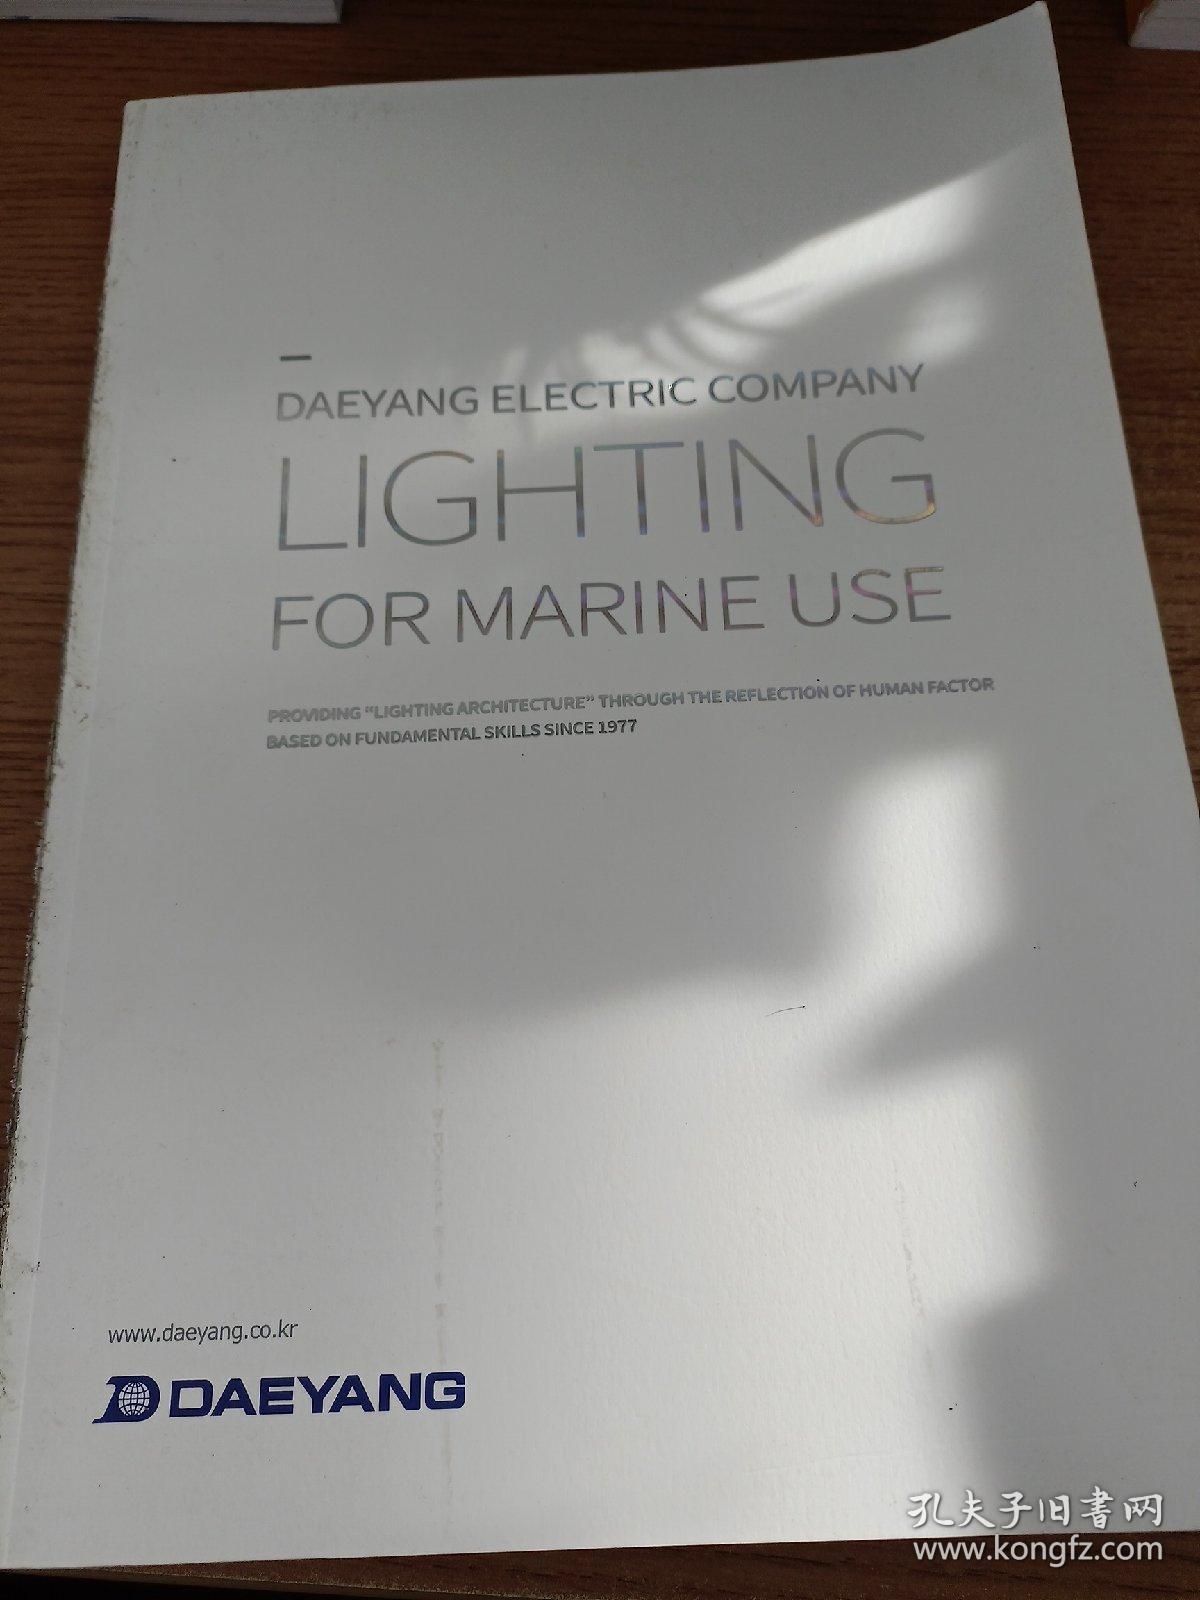 daeyang electric company lighting for marine use
大阳电气公司船用照明